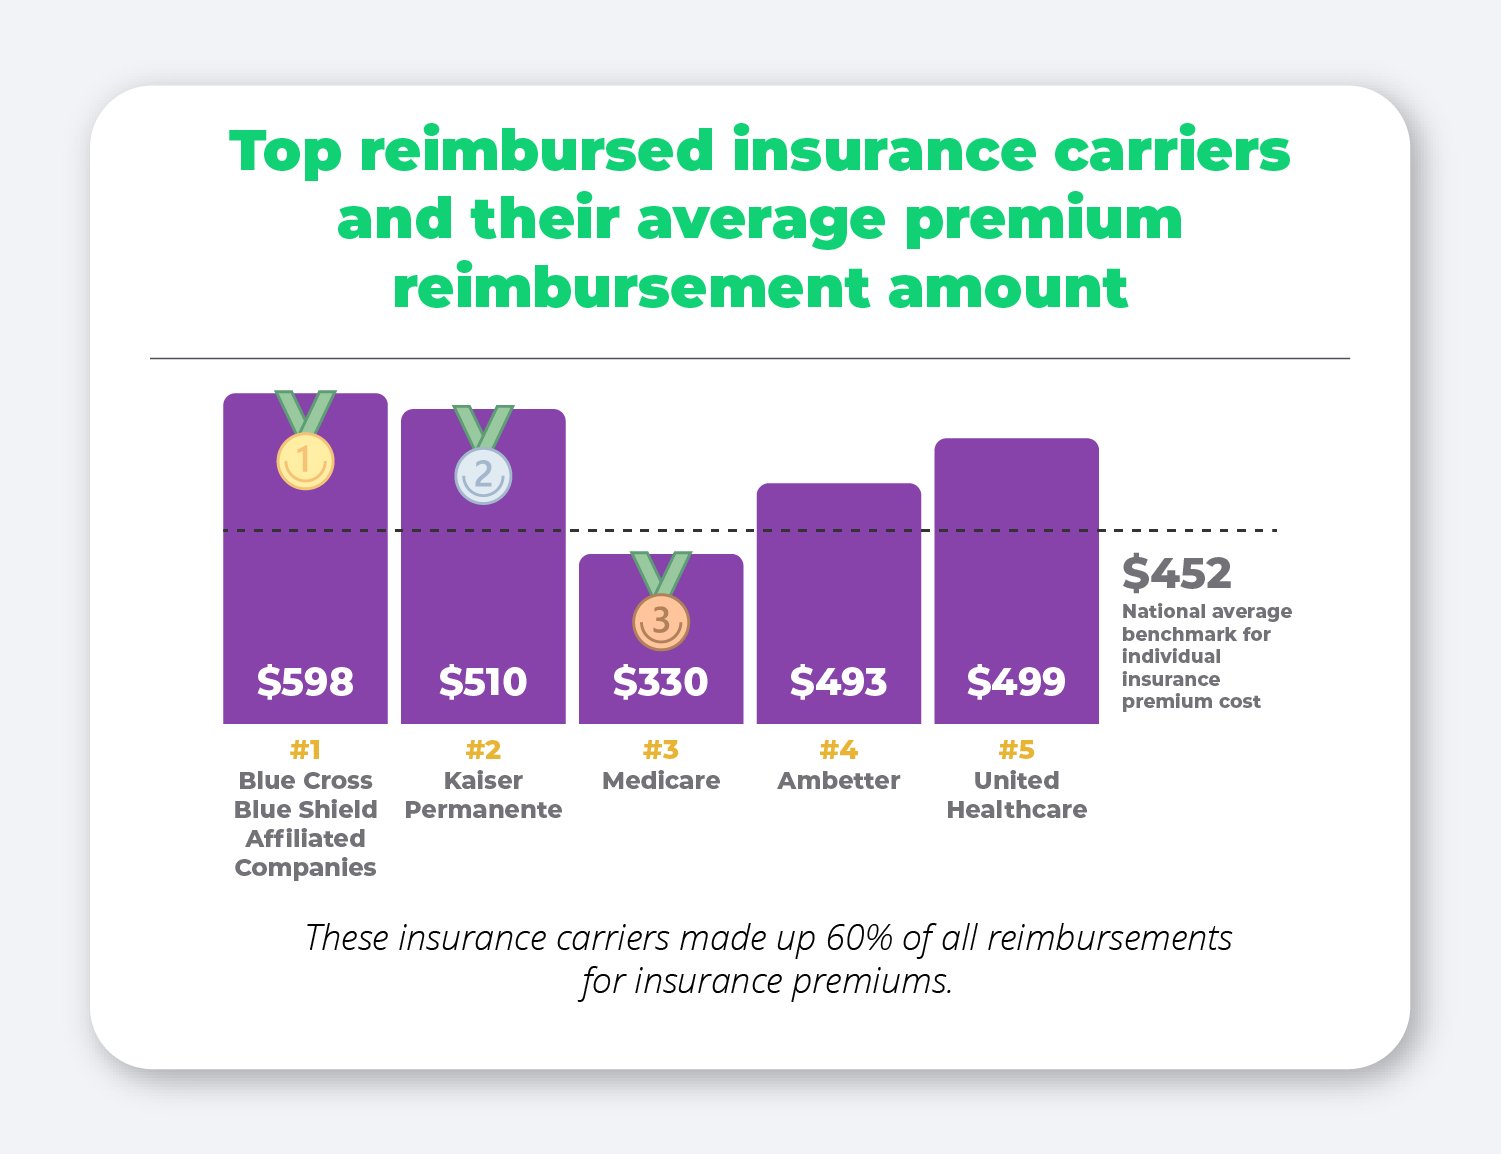 Top reimbursed insurance carriers and their average premium reimbursement amount.